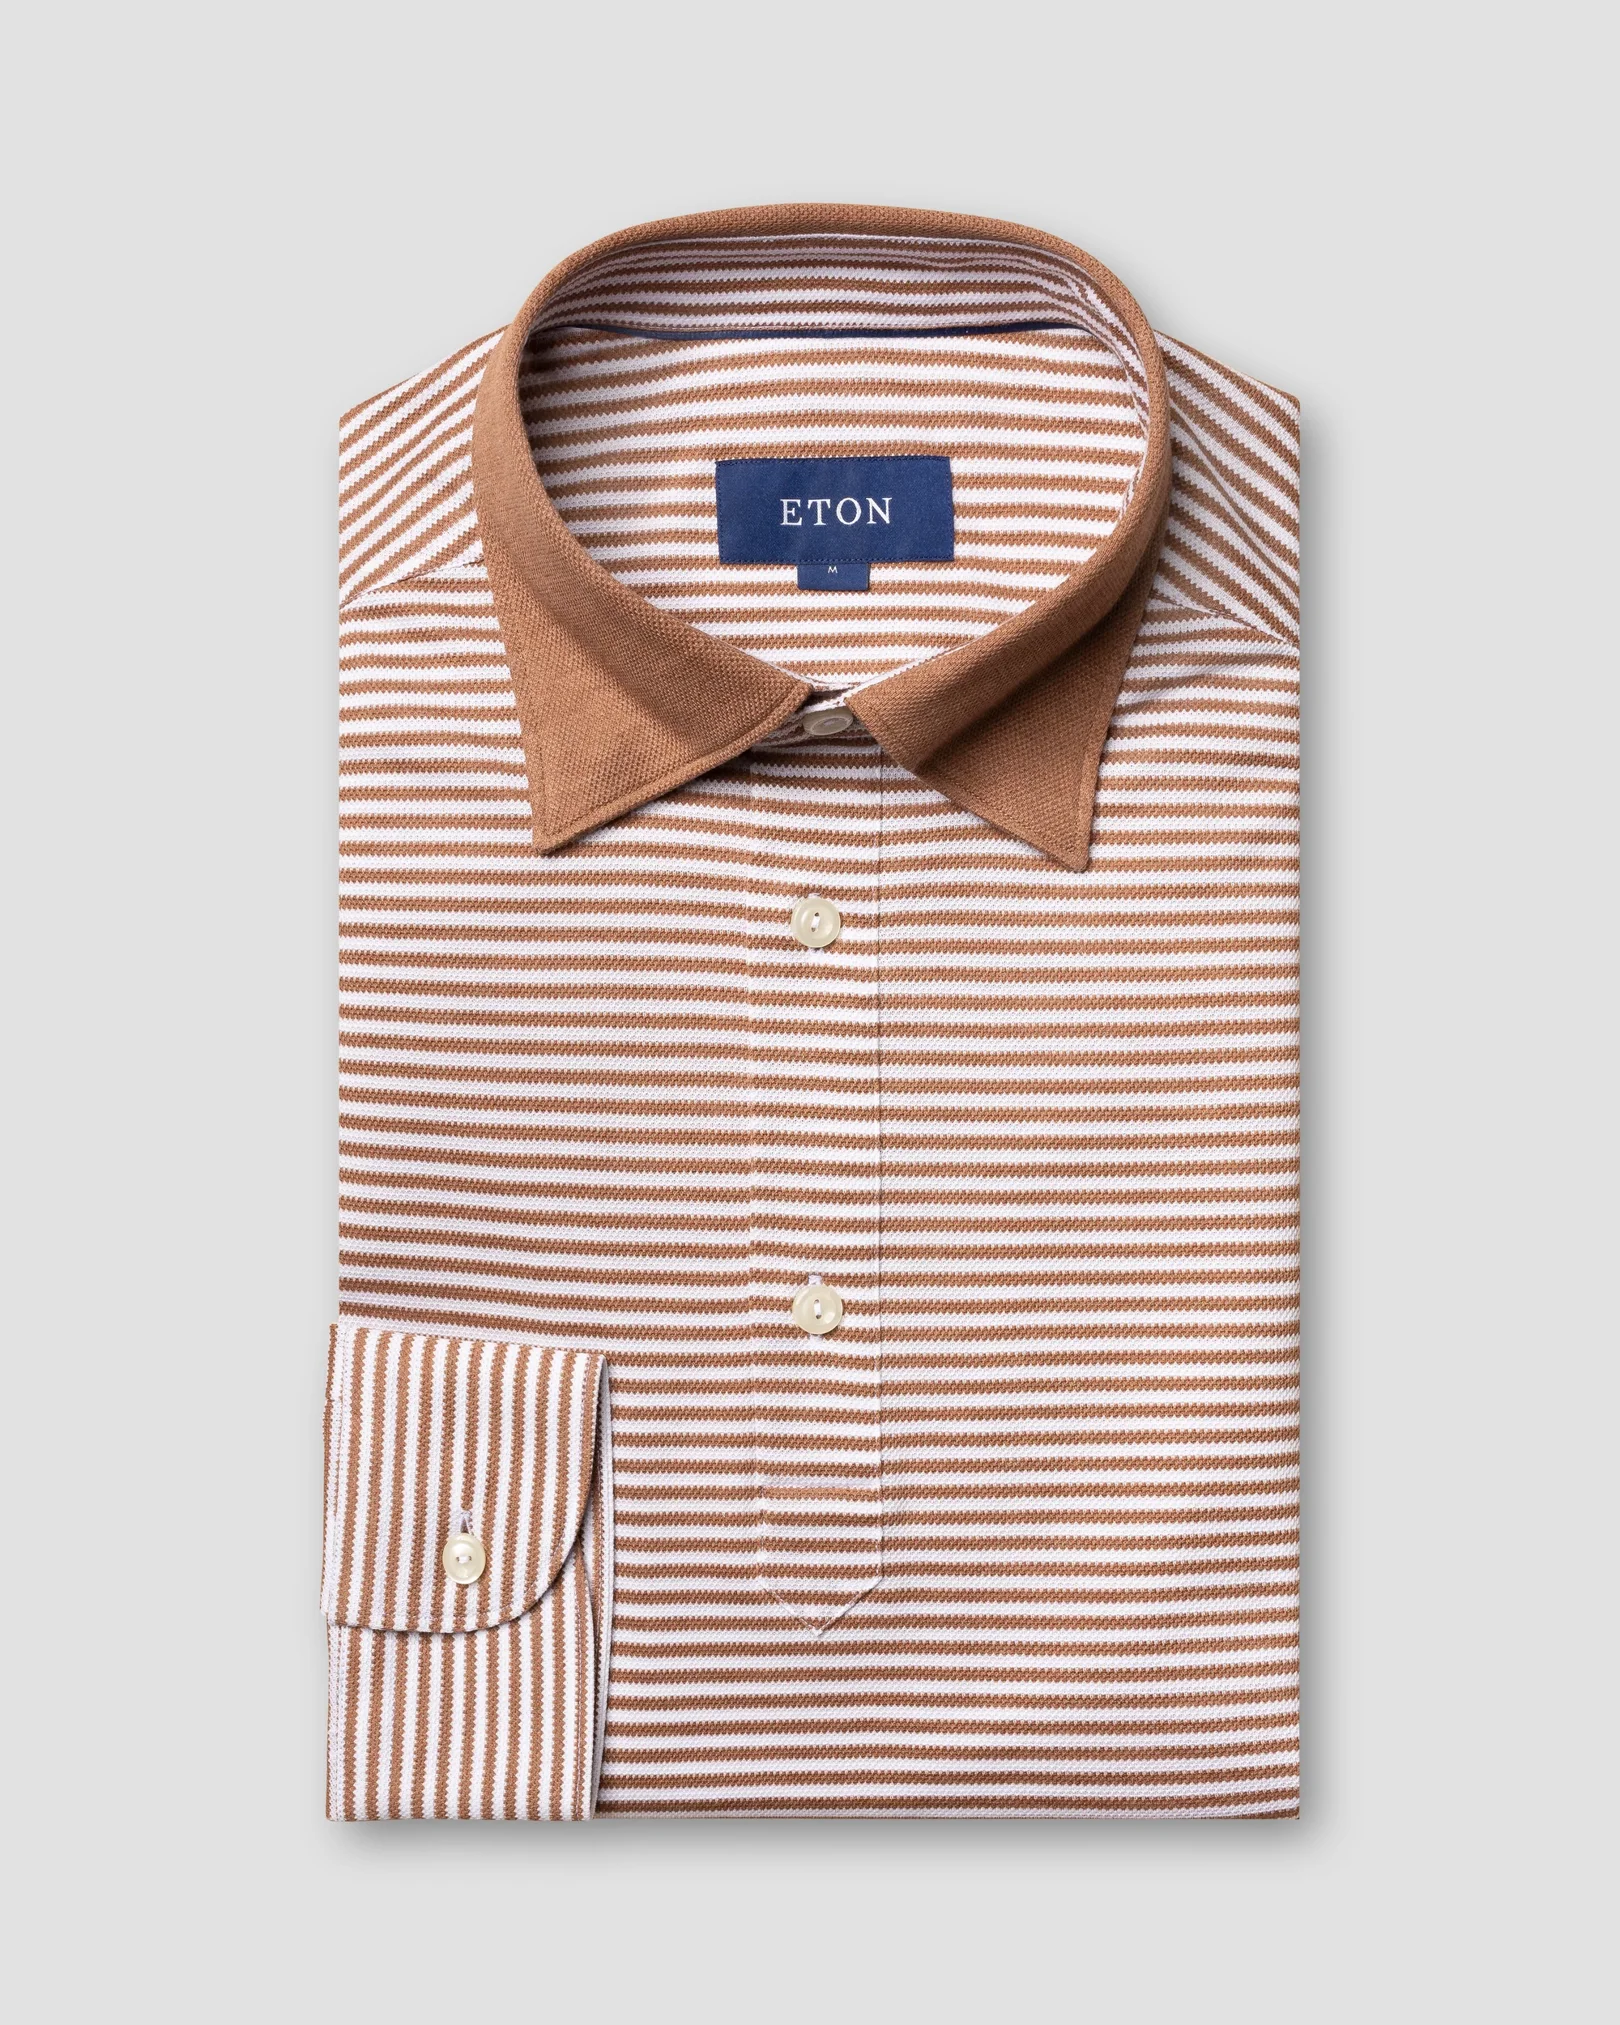 Eton - beige striped polo shirt long sleeved